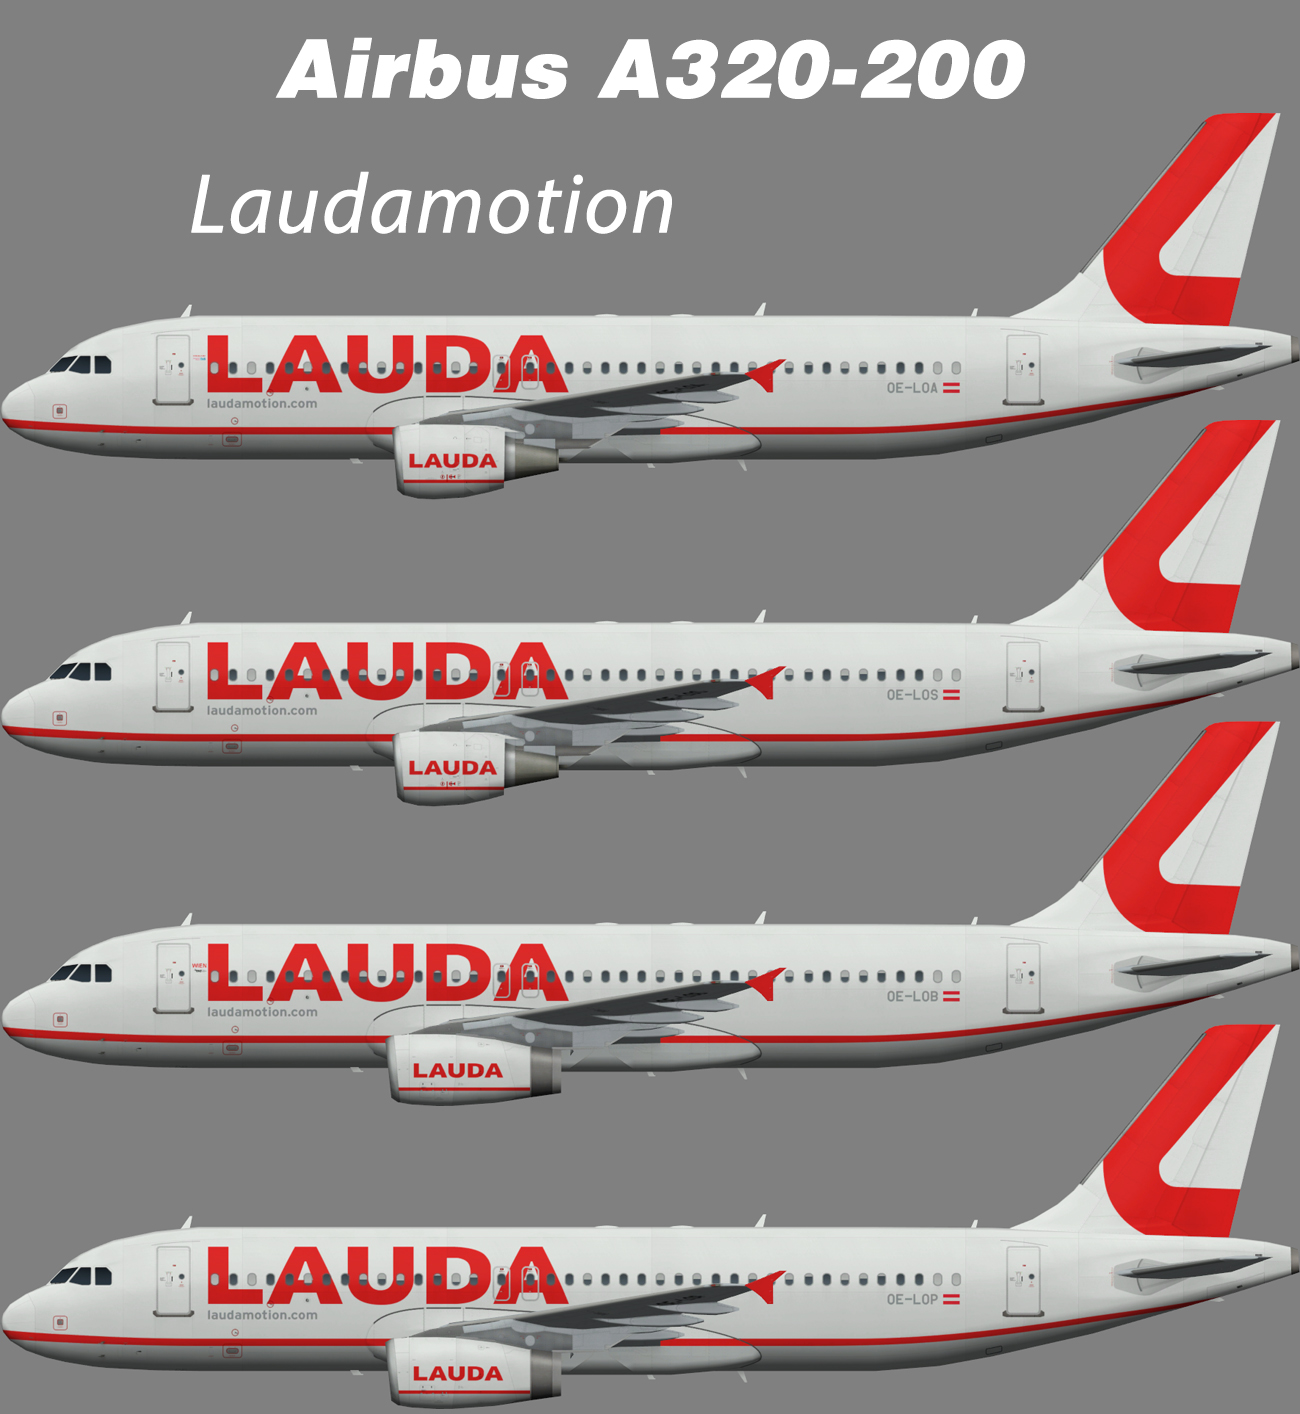 Laudamotion Airbus A320-200 – Nils